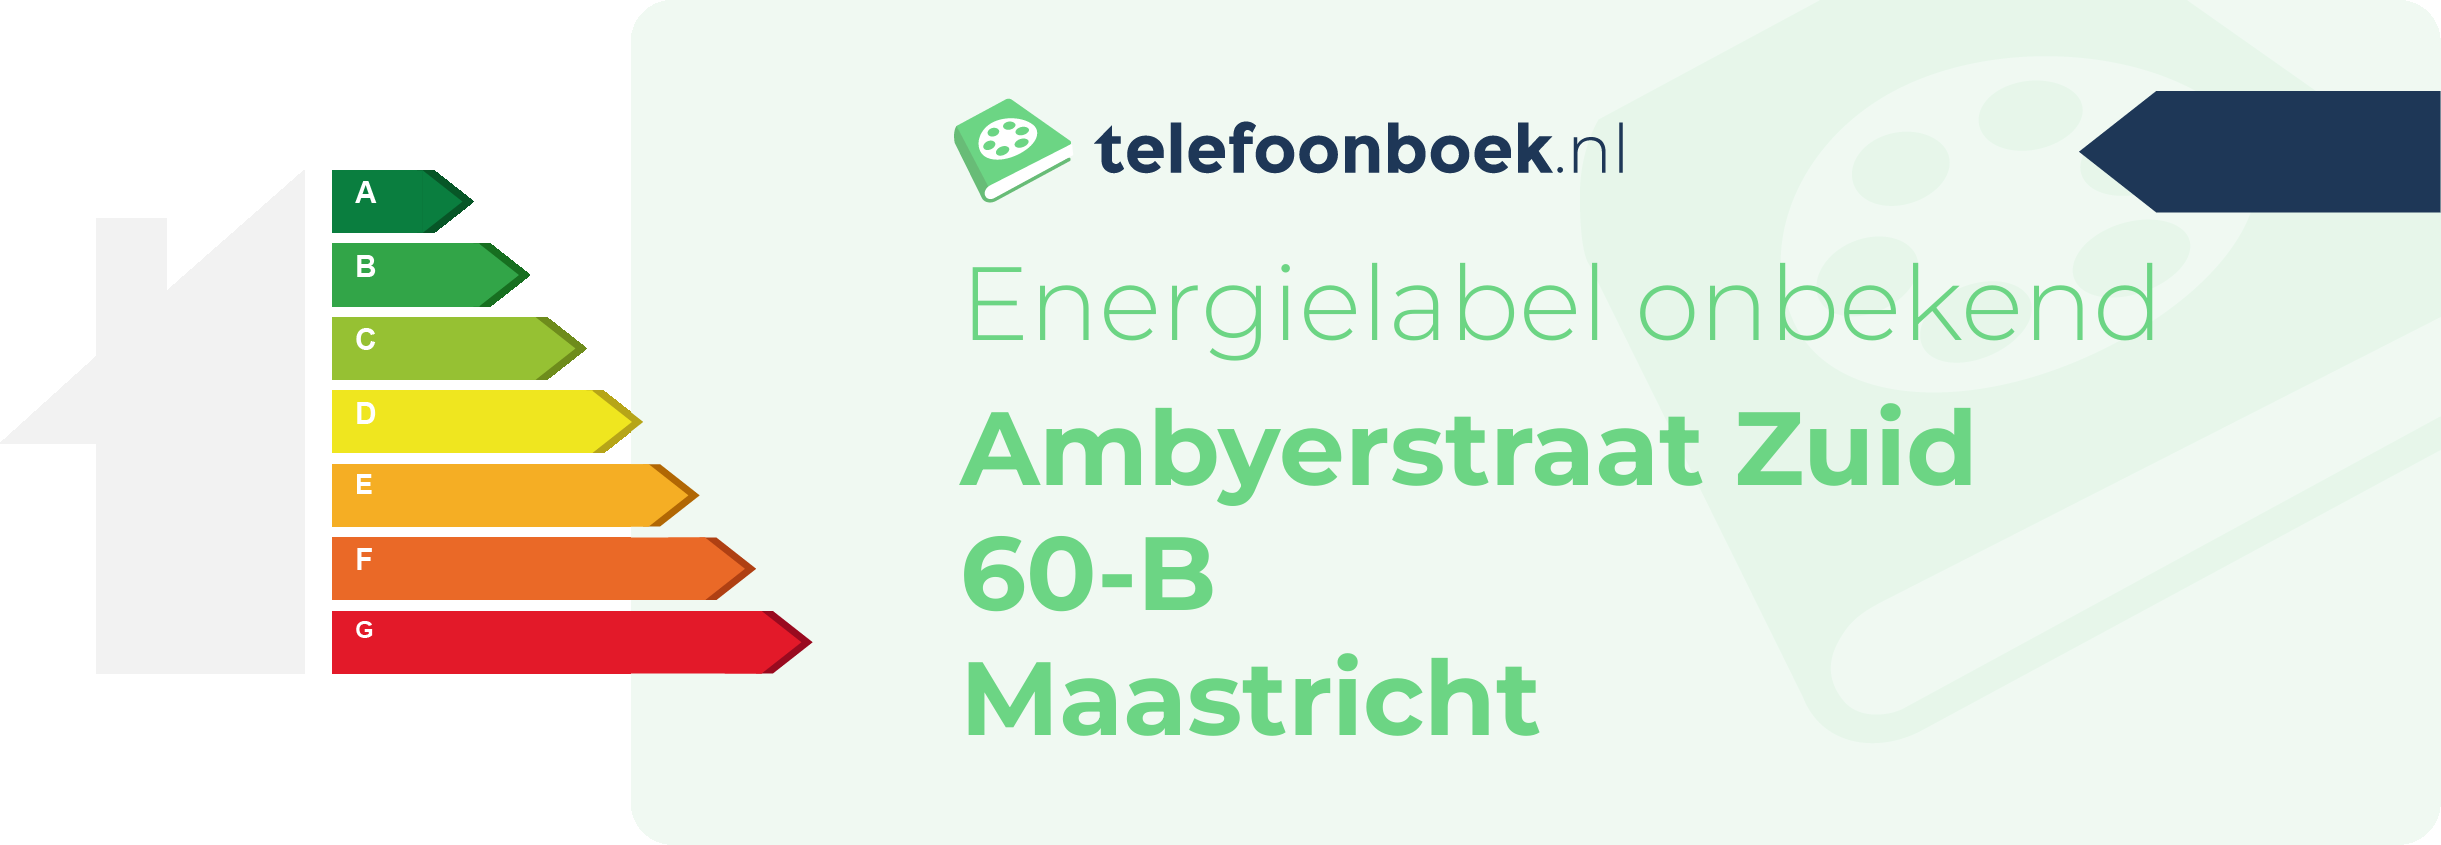 Energielabel Ambyerstraat Zuid 60-B Maastricht